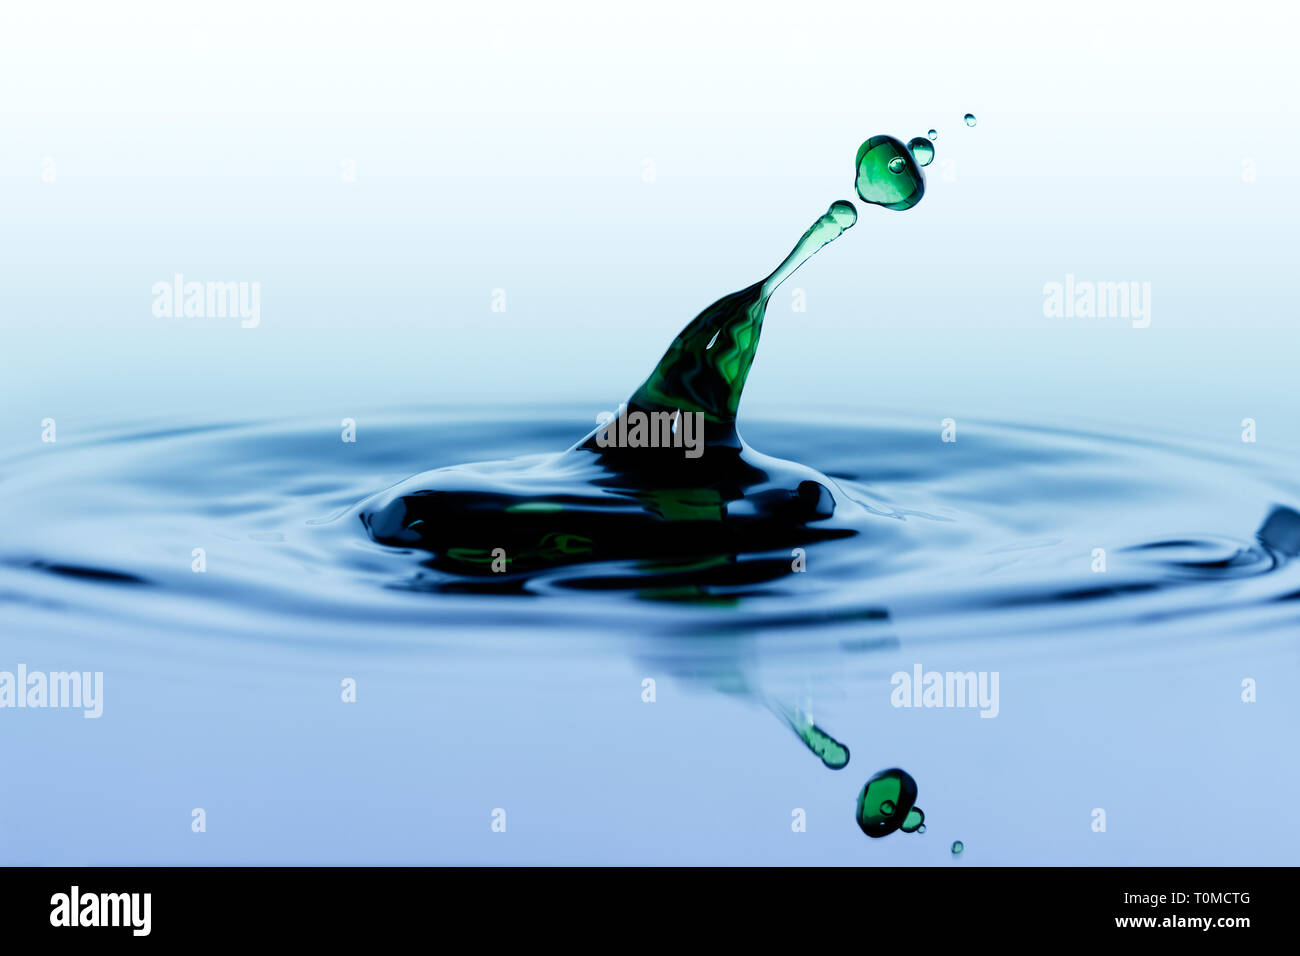 Splash. Green drop falling on smooth surface of water. Stock Photo